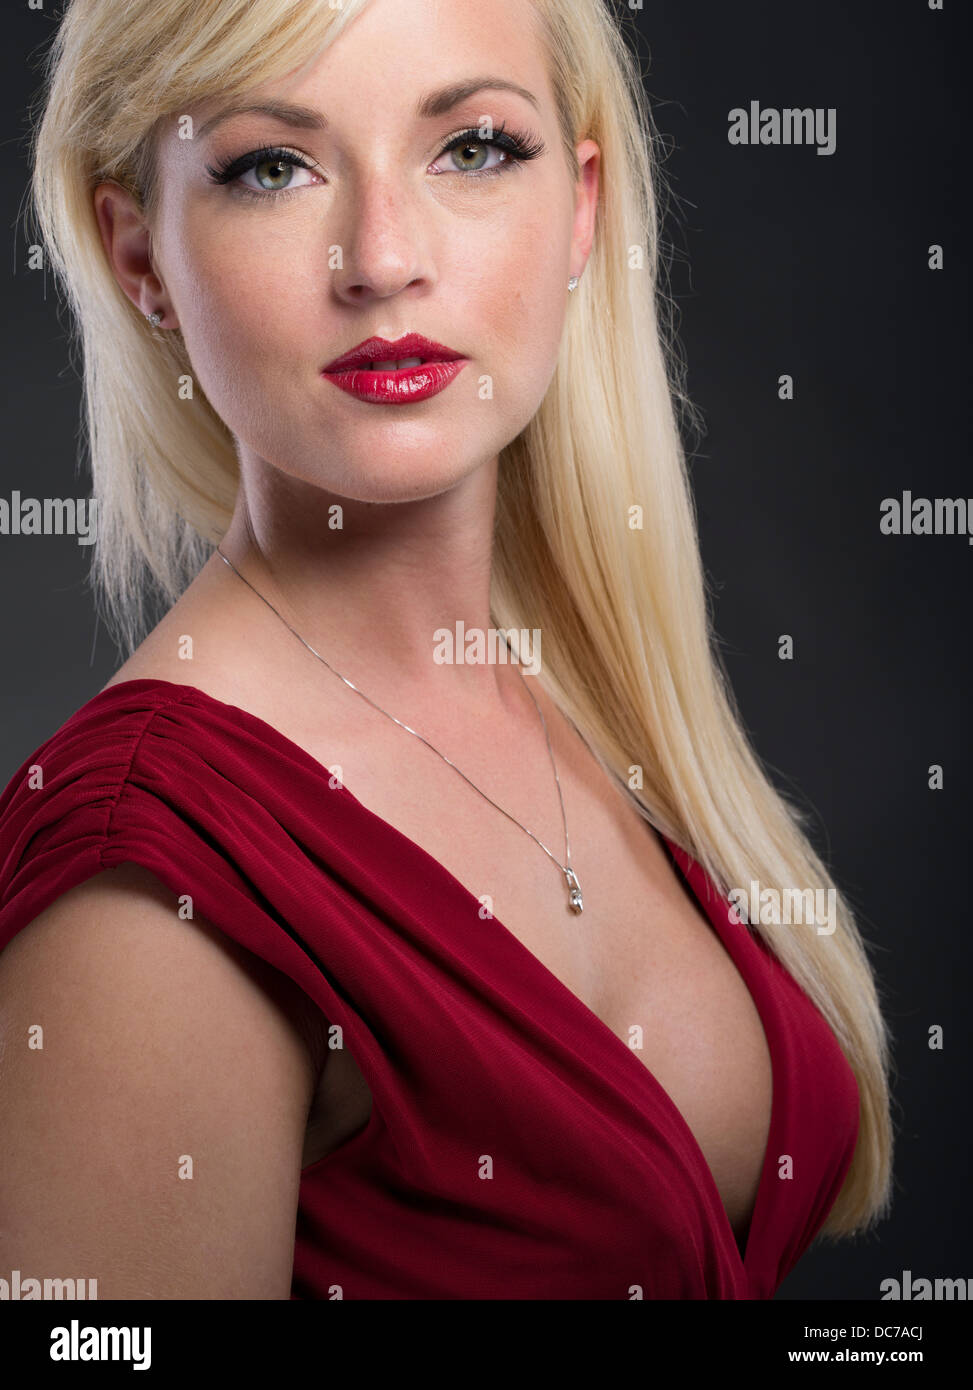 Beautiful blond Caucasian woman in her twenties wearing low cut deep red dress formal gown Stock Photo